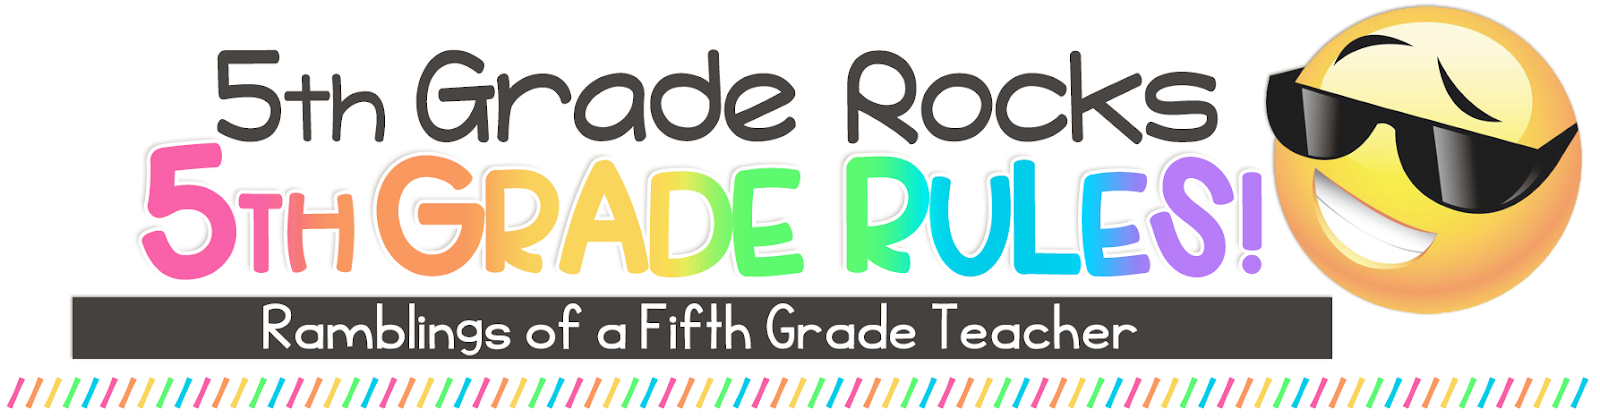 5th Grade Rocks, 5th Grade Rules